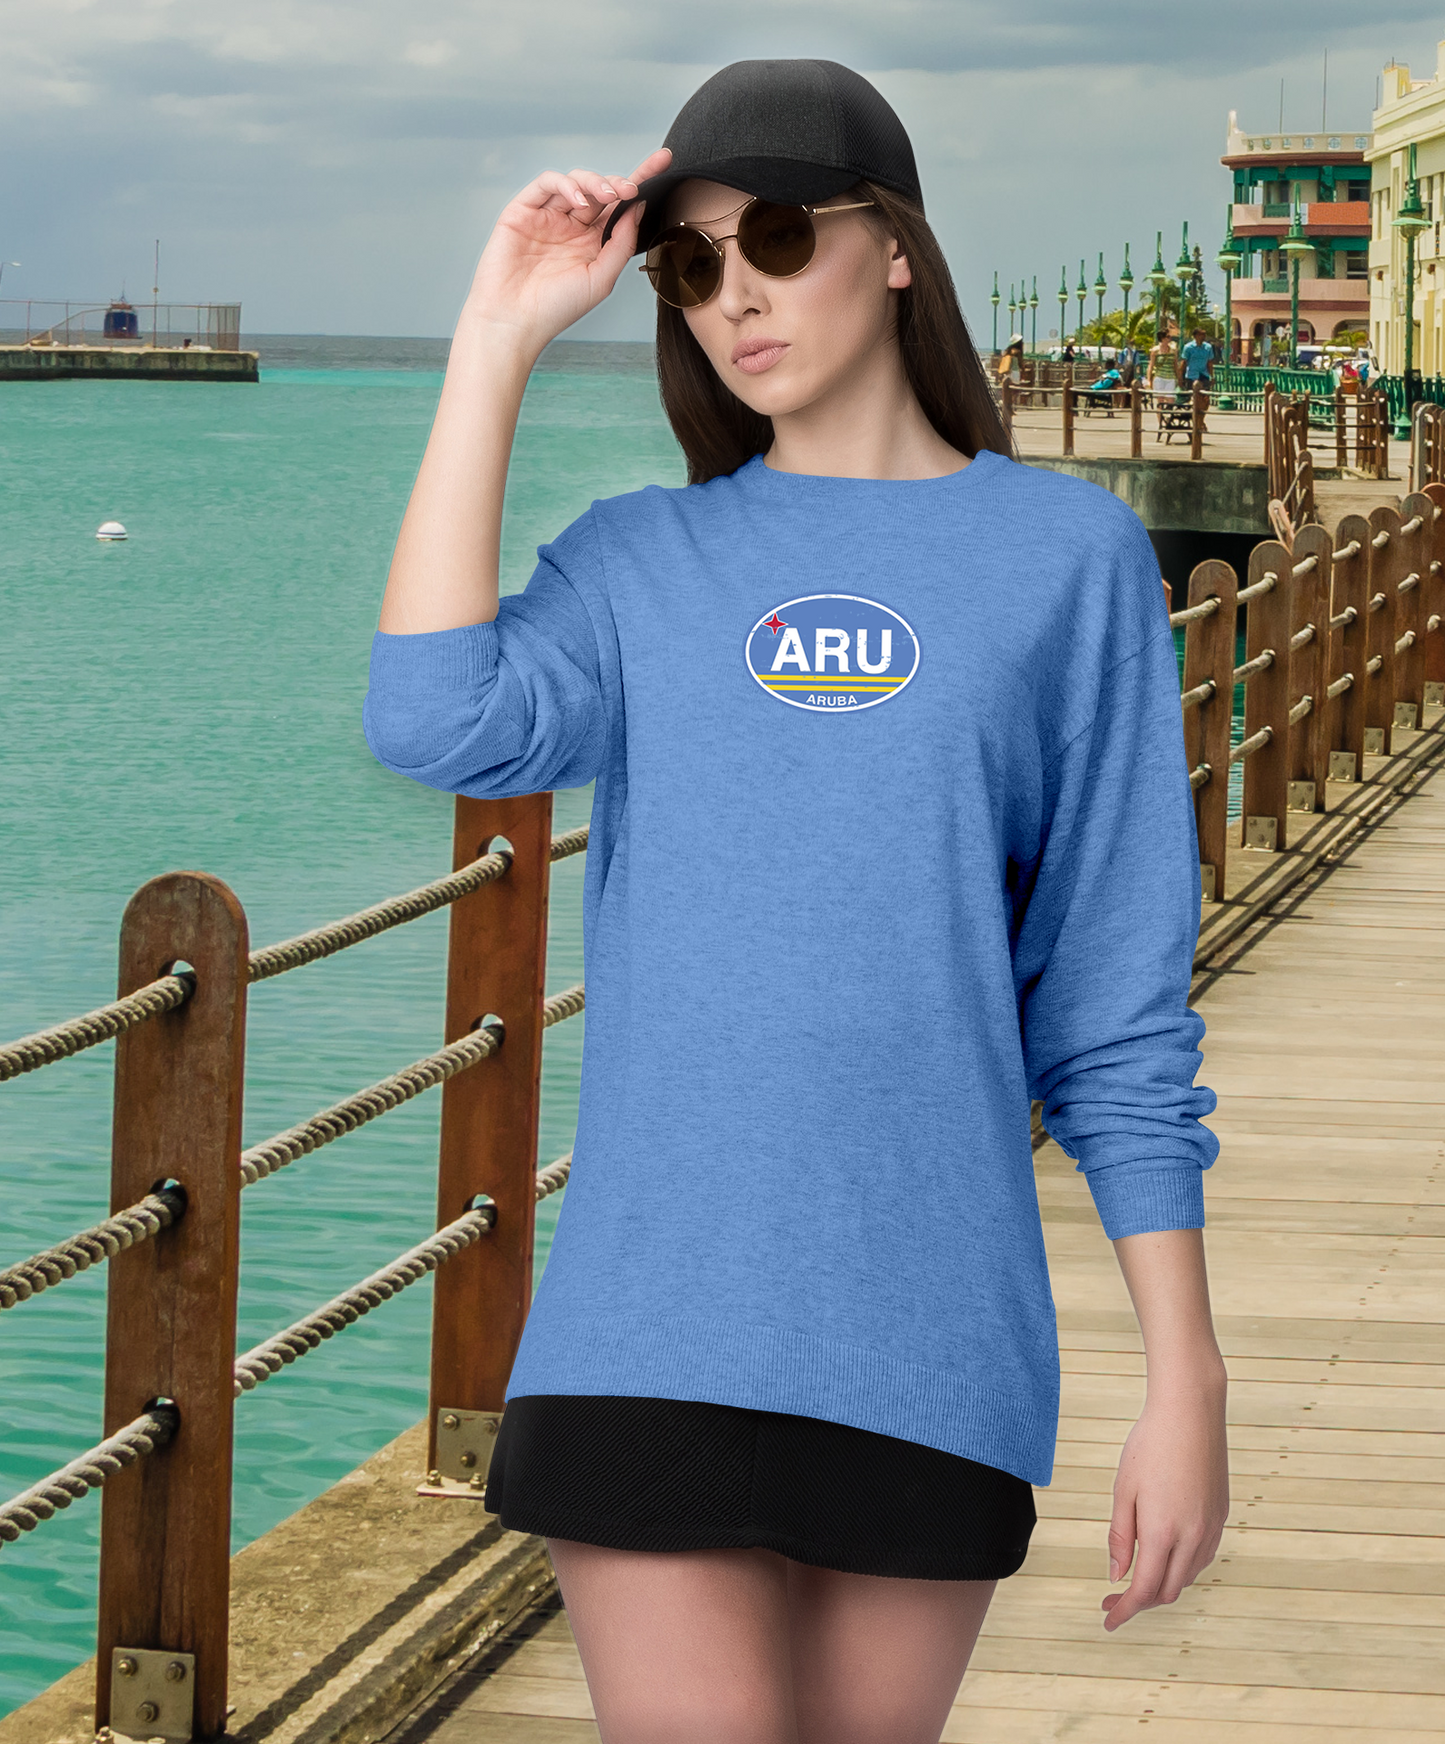 Aruba Women's Flag Long Sleeve T-Shirts - My Destination Location